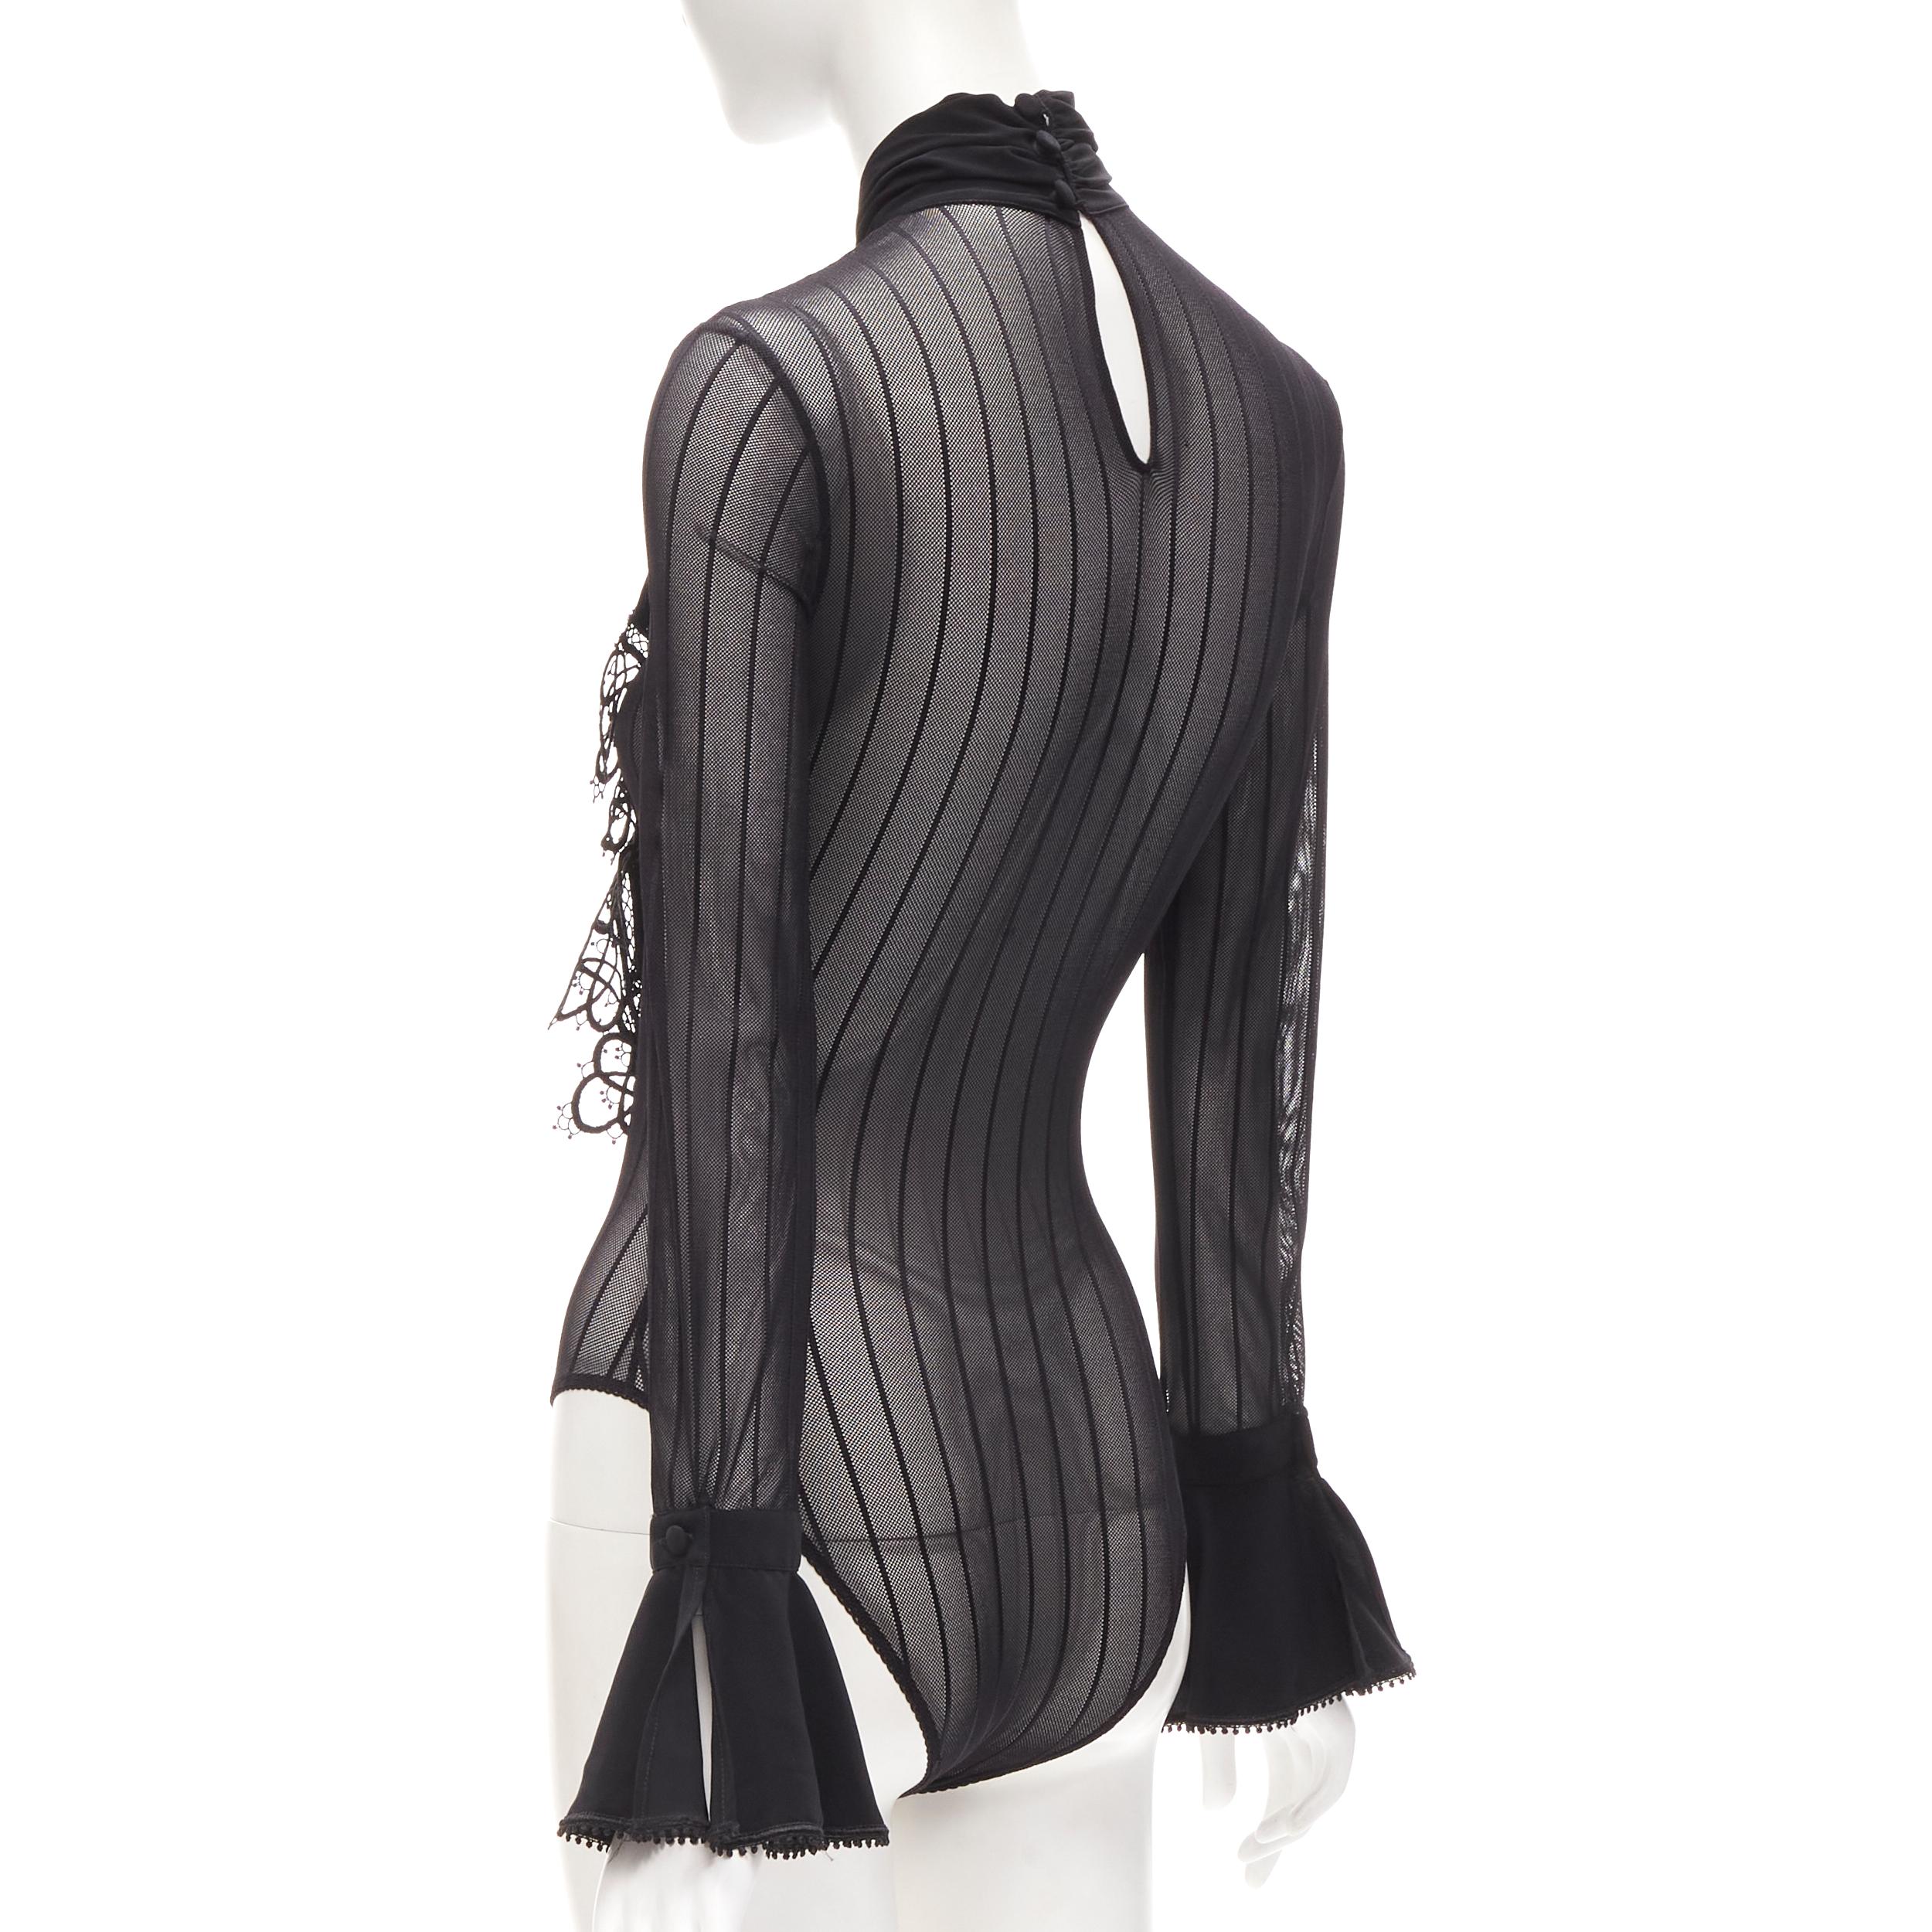 RITMO DI PERLA LA PERLA Vintage black embroidery tie scarf sheer bodysuit IT42 M 2